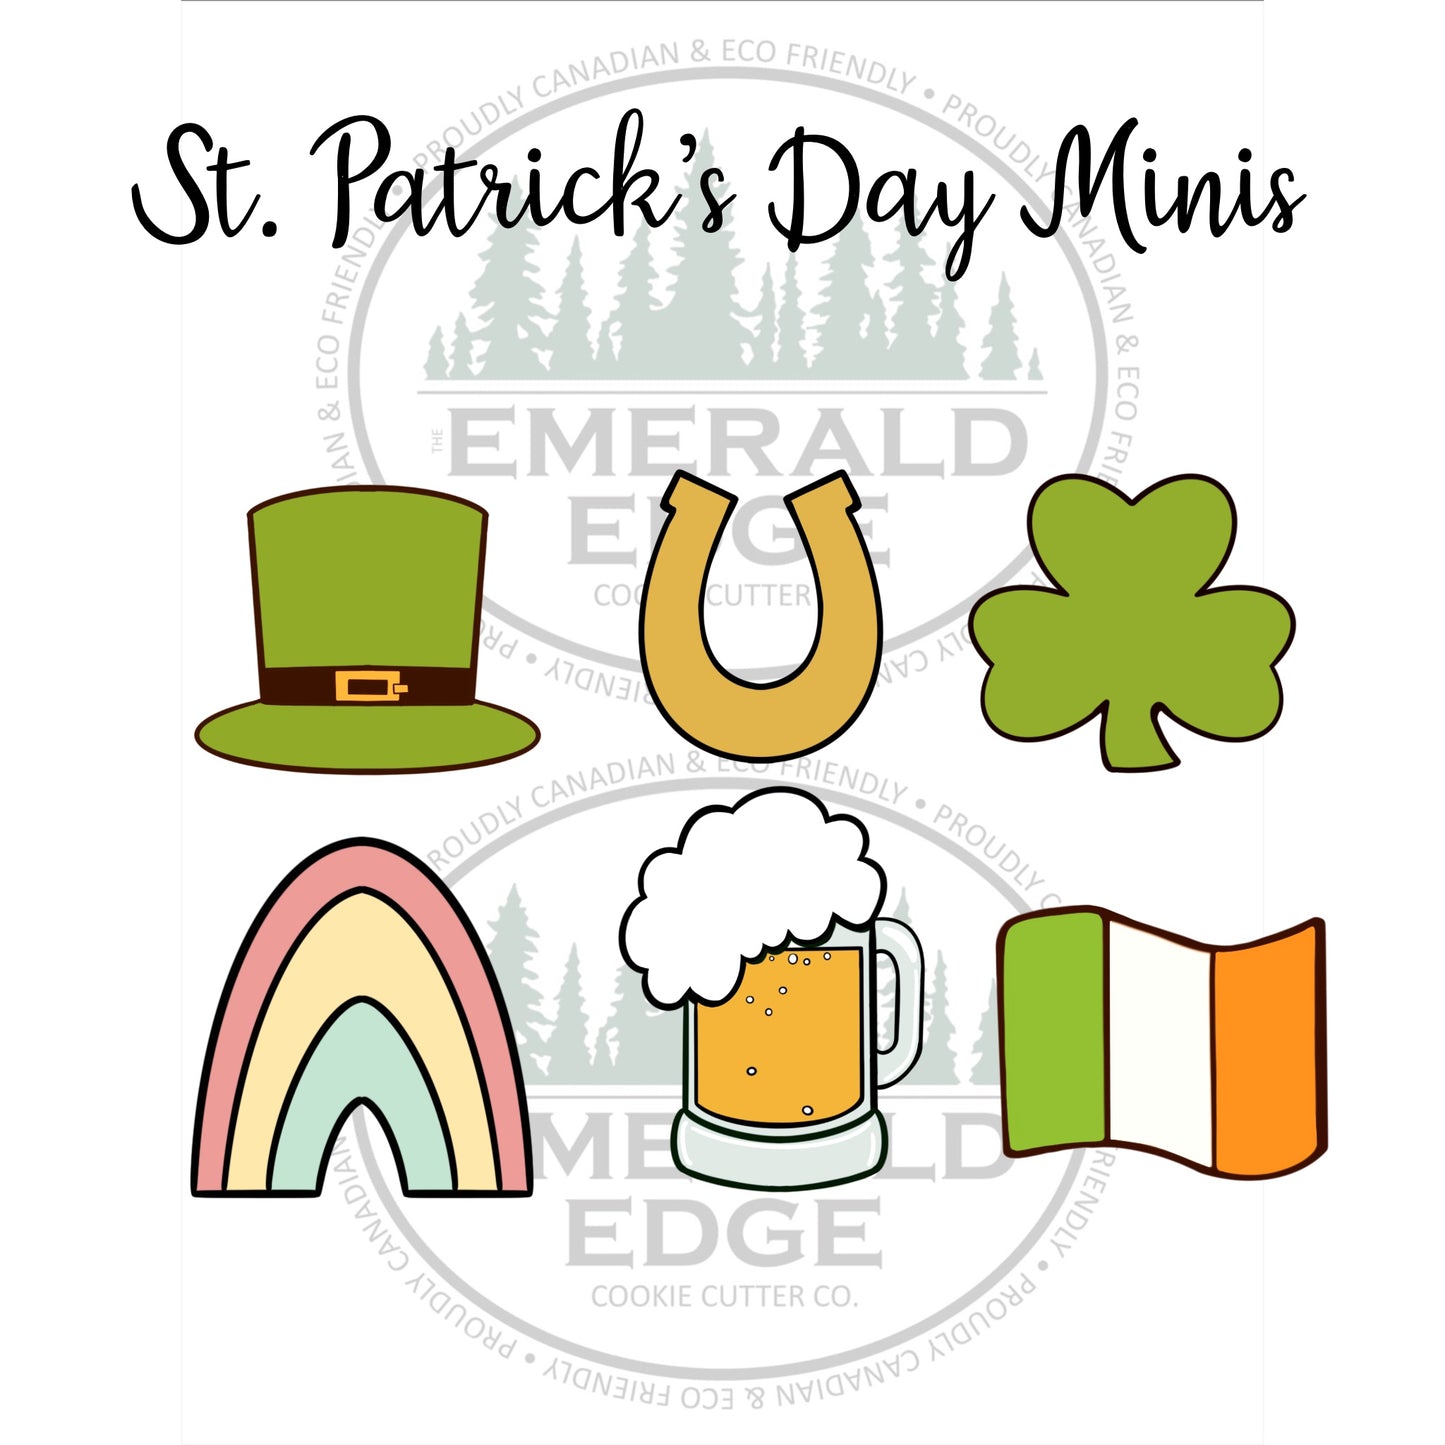 St. Patrick’s Day Minis